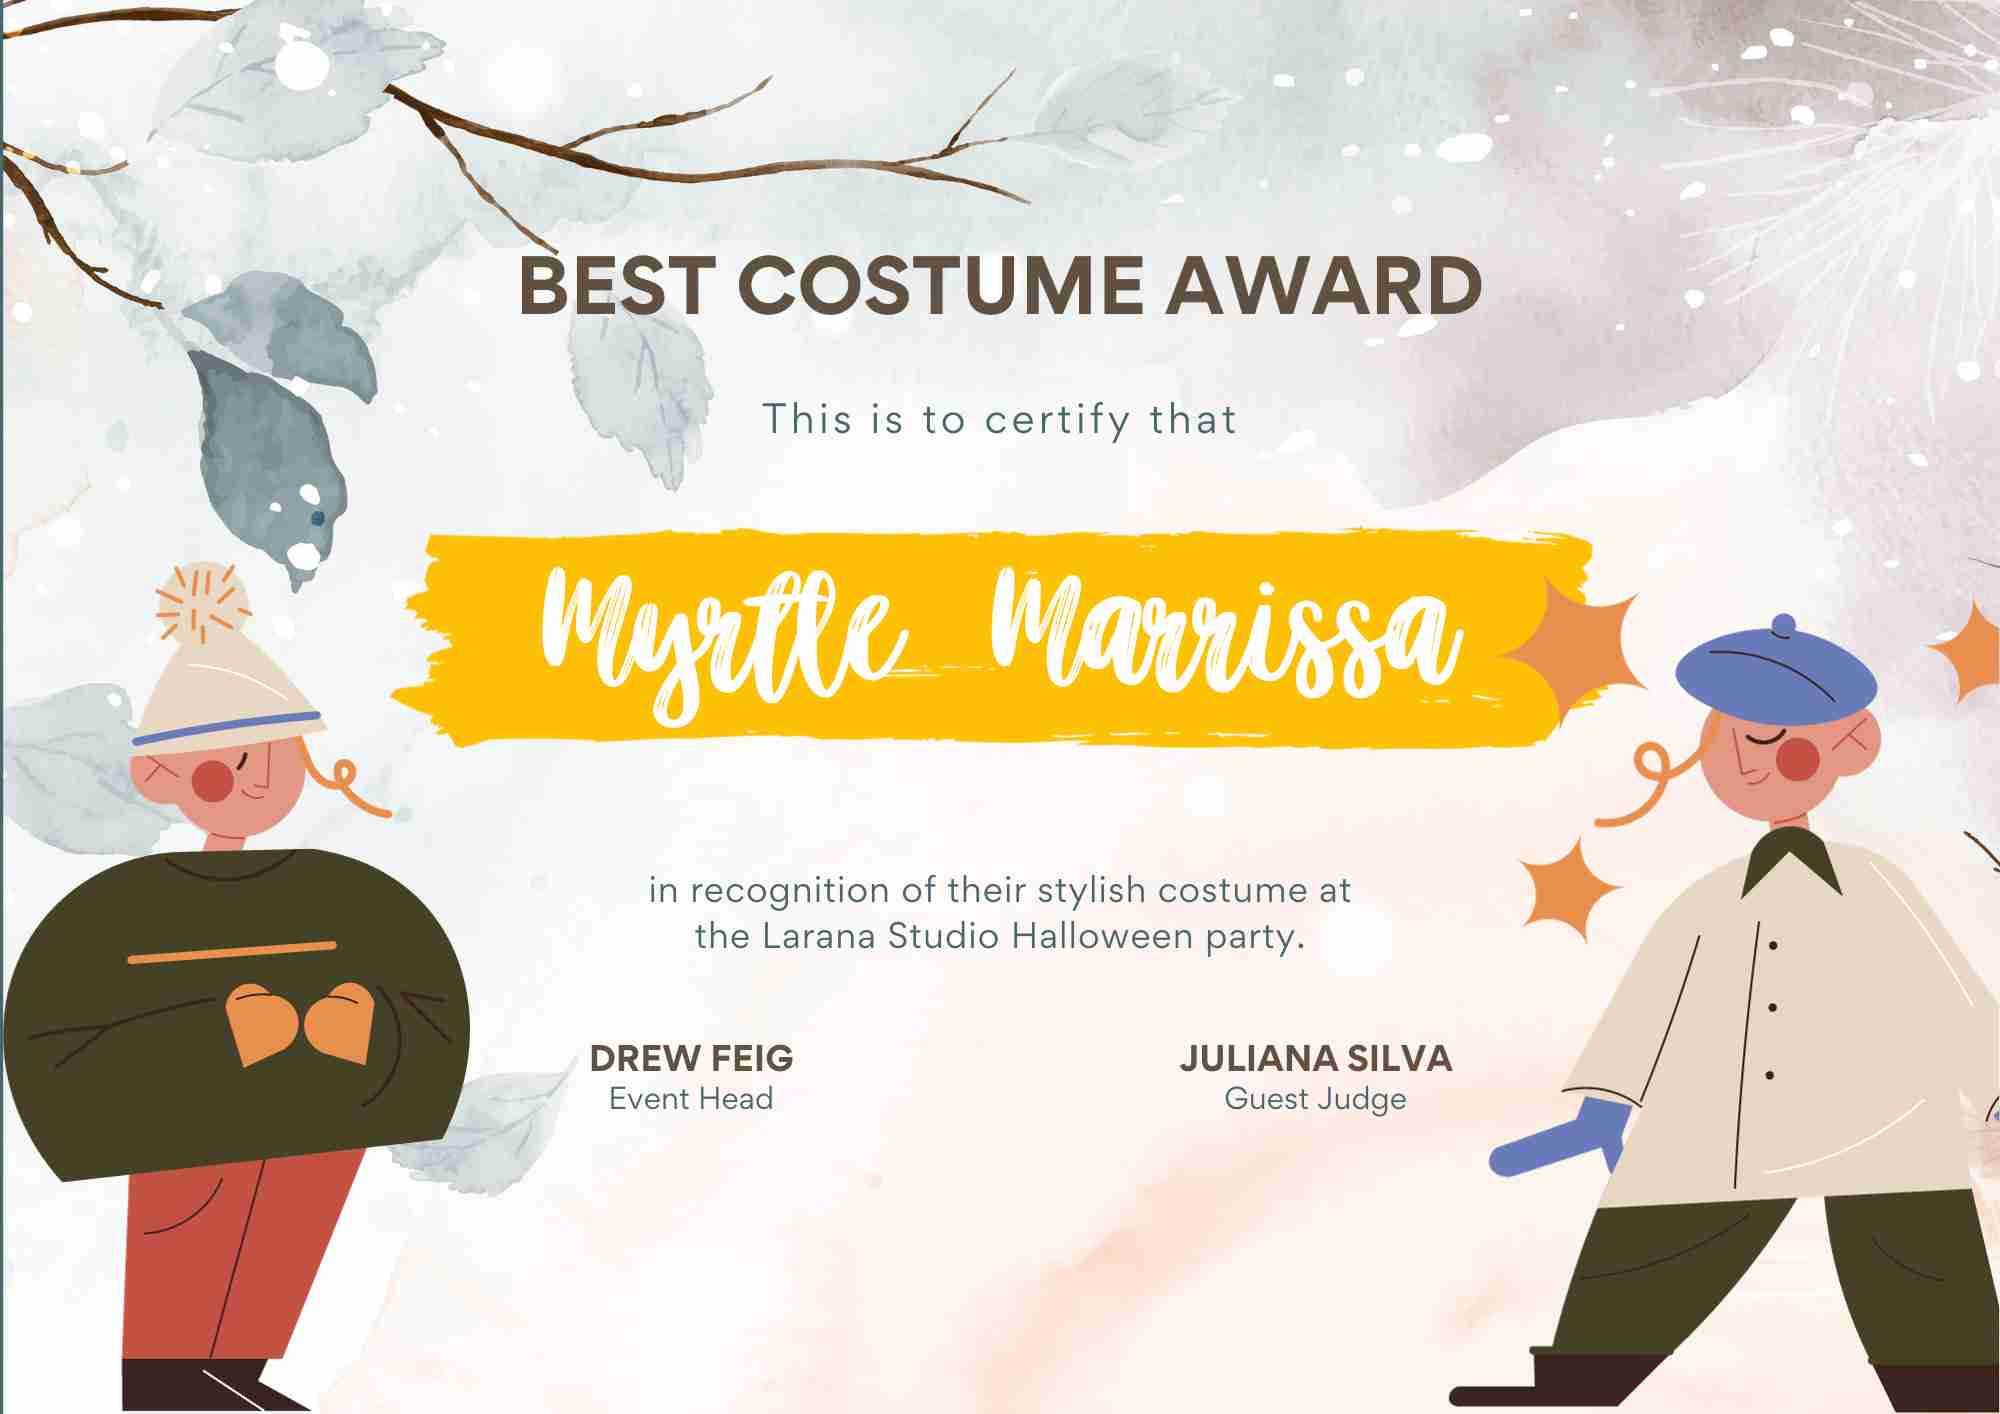 Winter Costume Award Certificate - Myrtle Marrissa